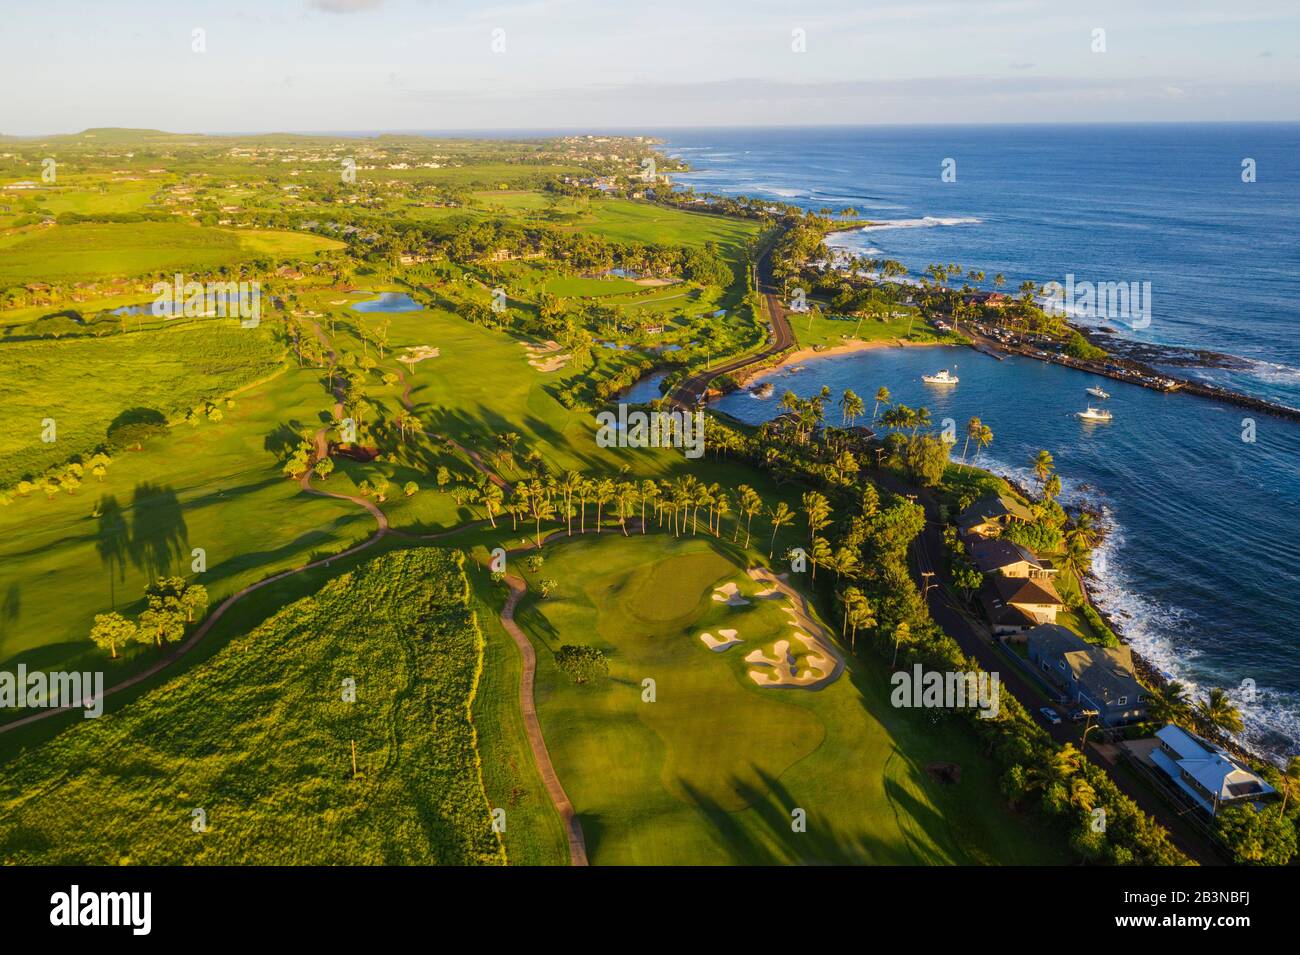 Vista aérea del campo de golf de Poipu, Kauai Island, Hawaii, Estados Unidos de América, América del Norte Foto de stock